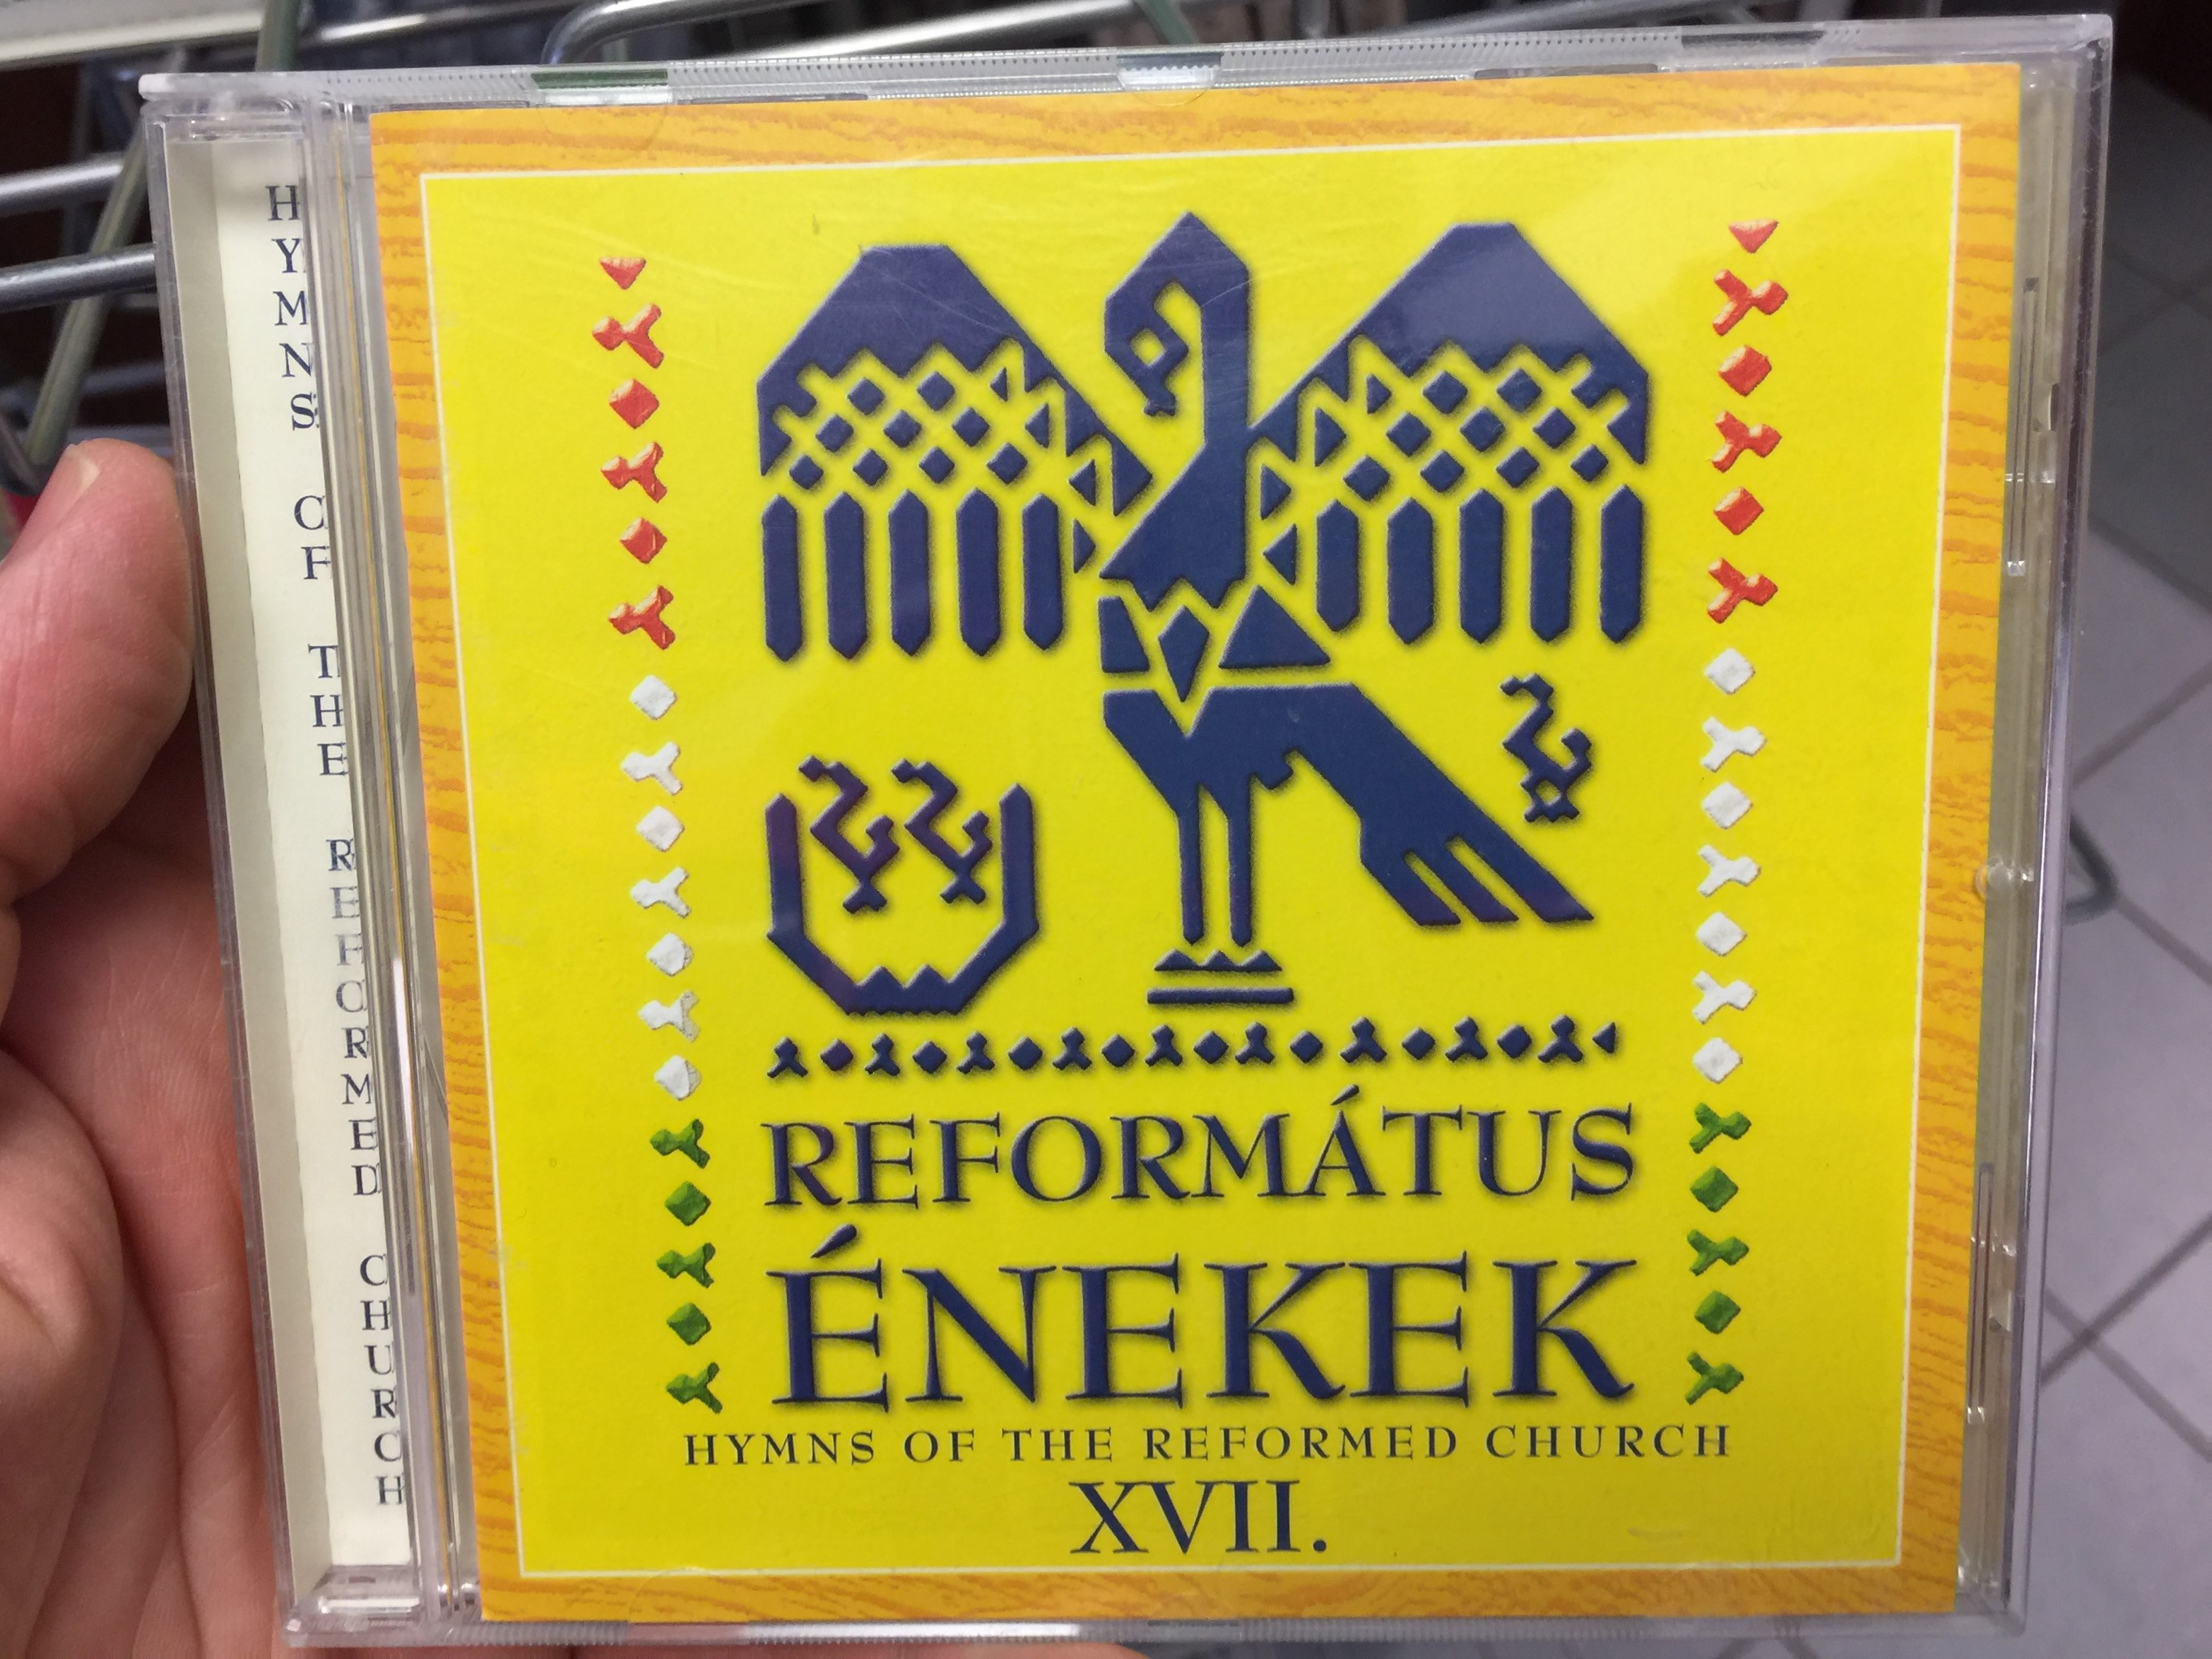 reform-tus-nekek-17.-audio-cd-2018-hymns-of-the-reformed-church-1.jpg